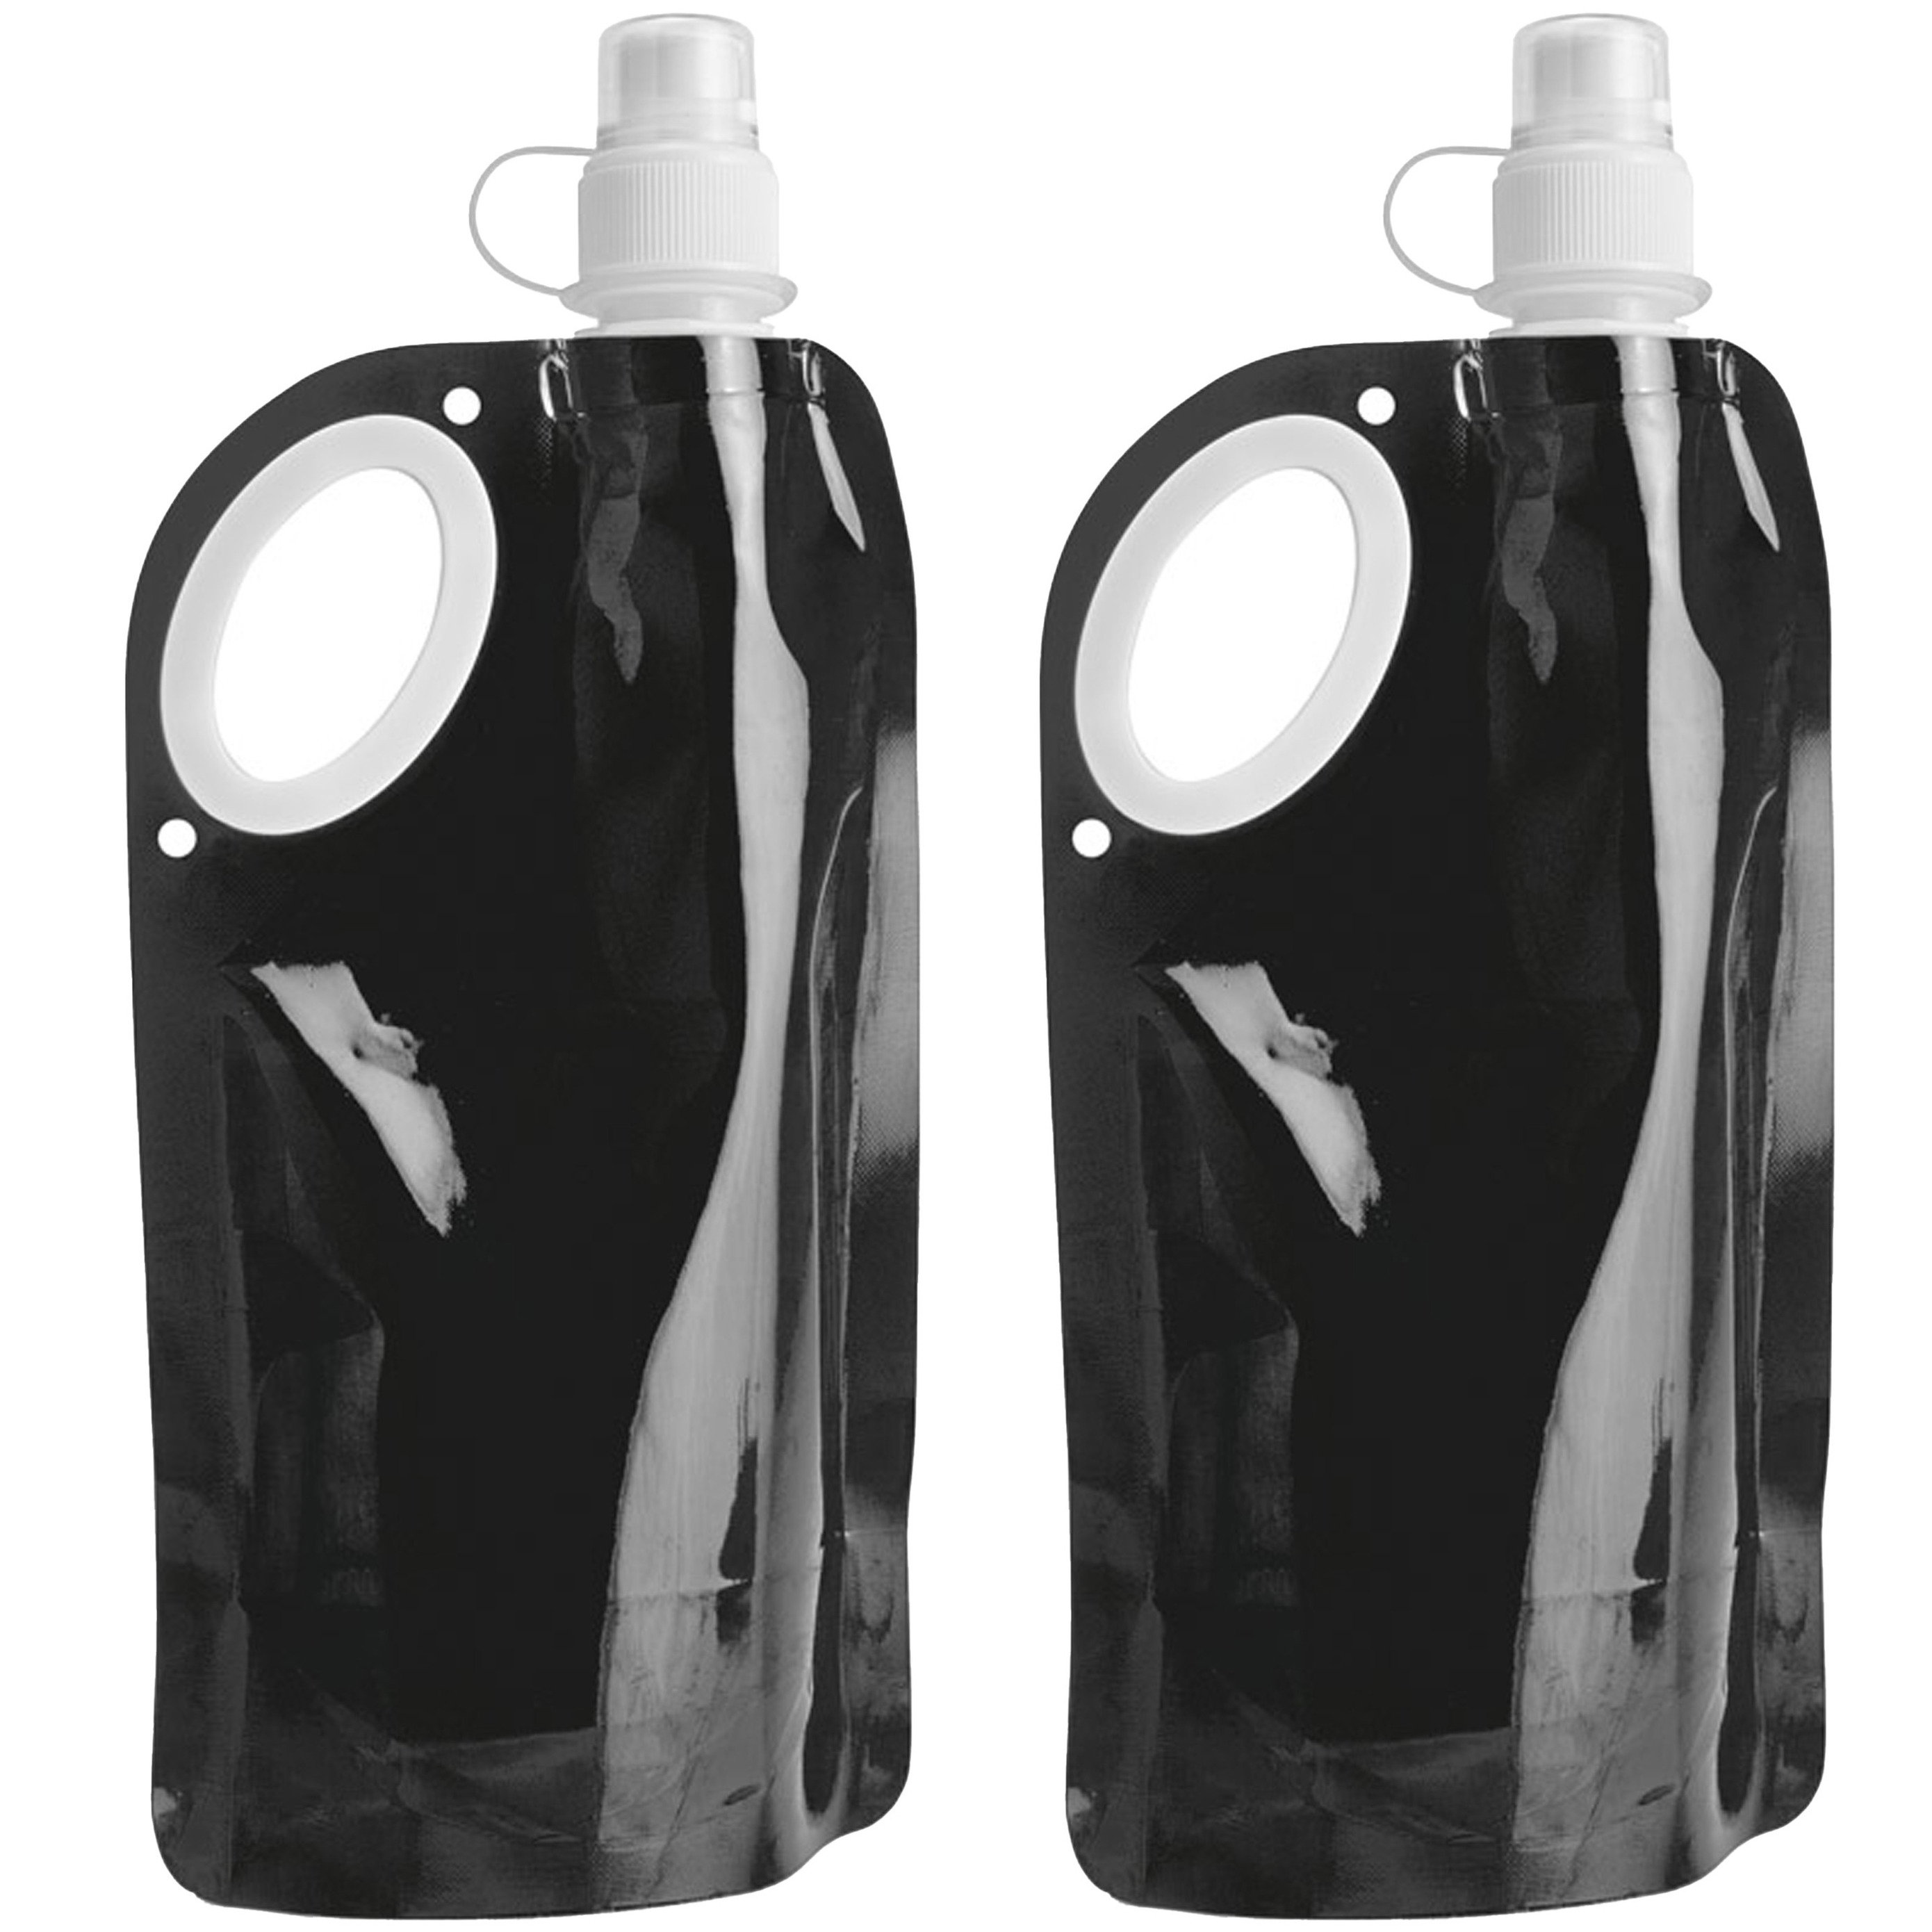 Waterfles-drinkfles opvouwbaar 2x zwart kunststof 770 ml schroefdop waterzak